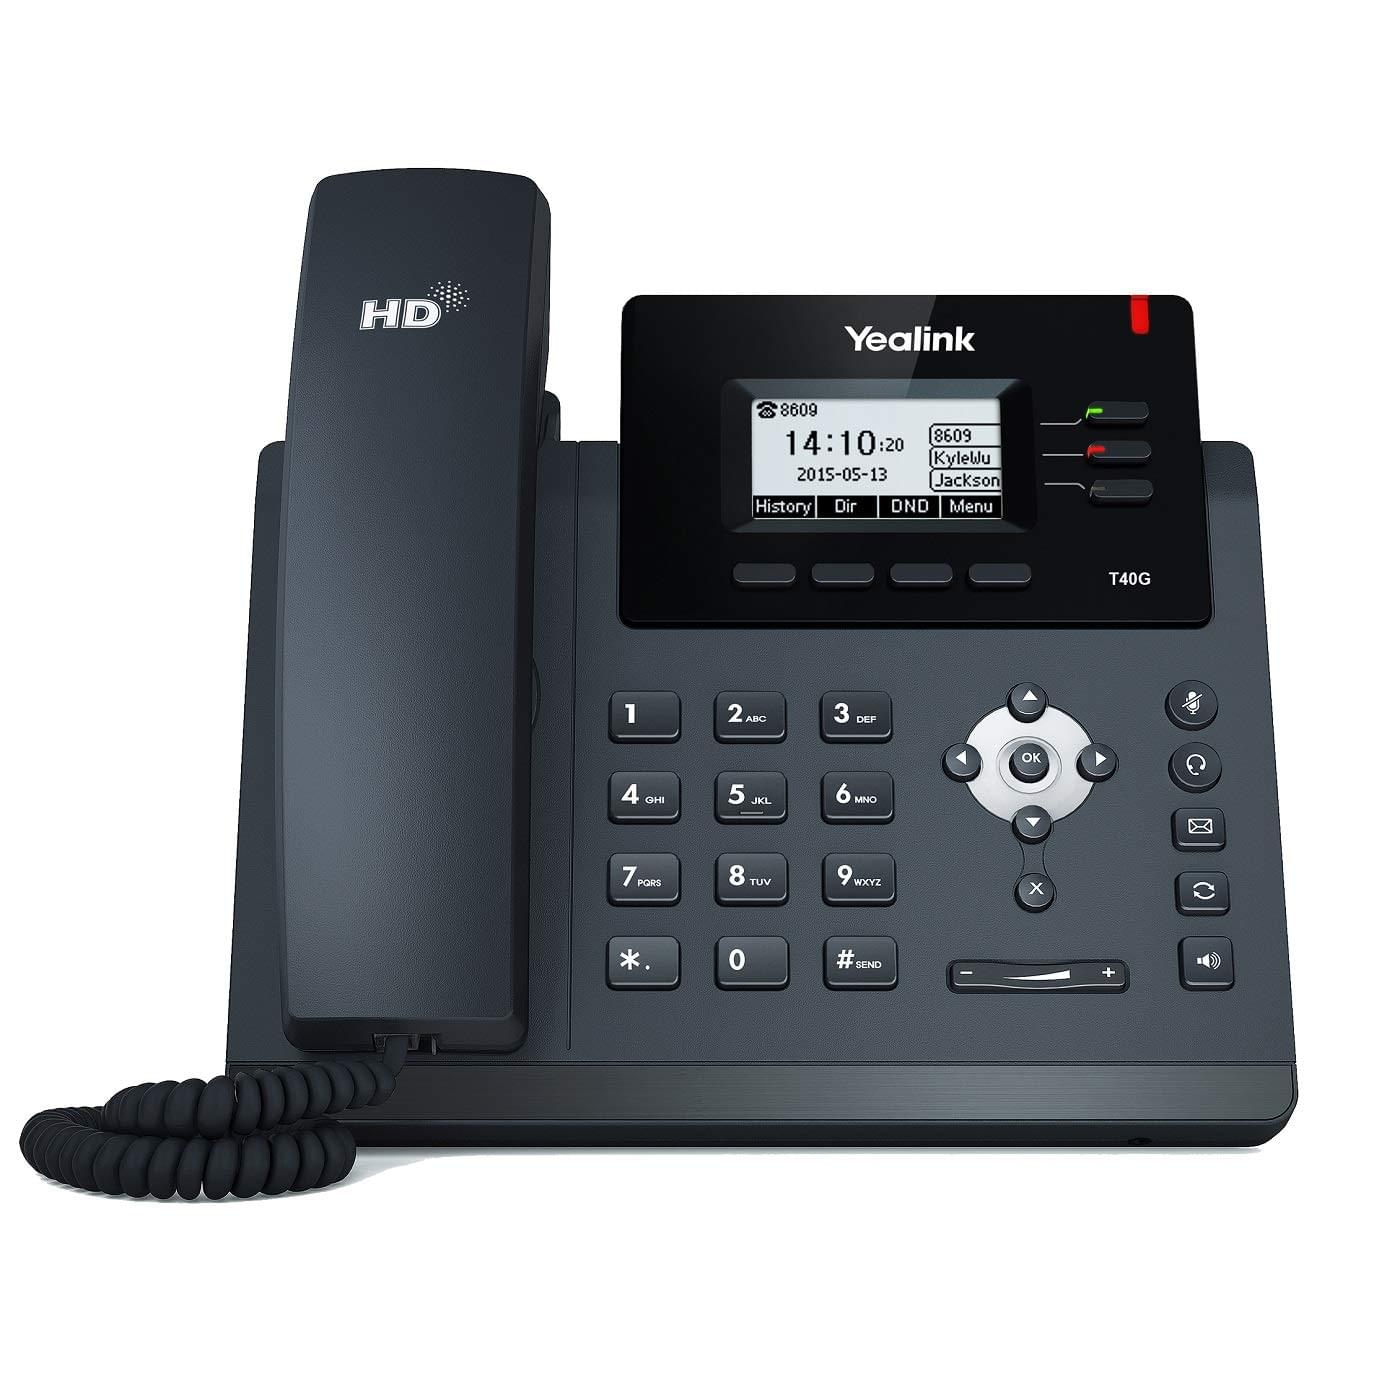 Yealink 3 line business voip phone